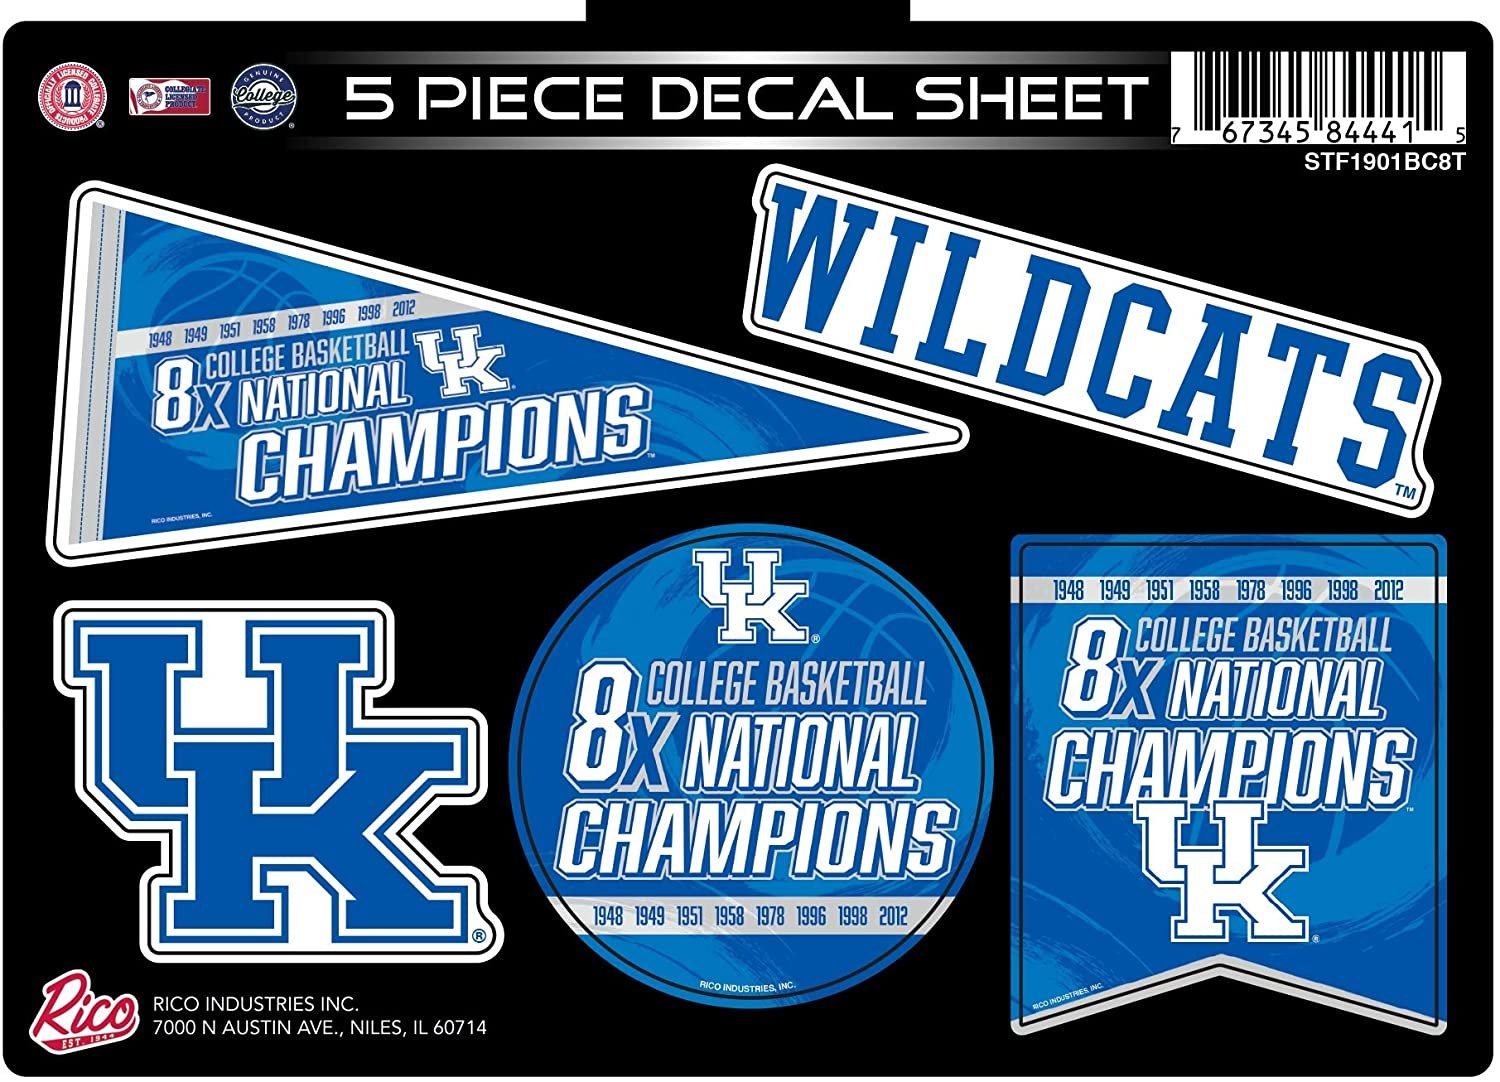 Kentucky Wildcats Decal Sticker Sheet 8X Time Champions 5 Piece Multi Flat Vinyl Emblem College Basketball University of